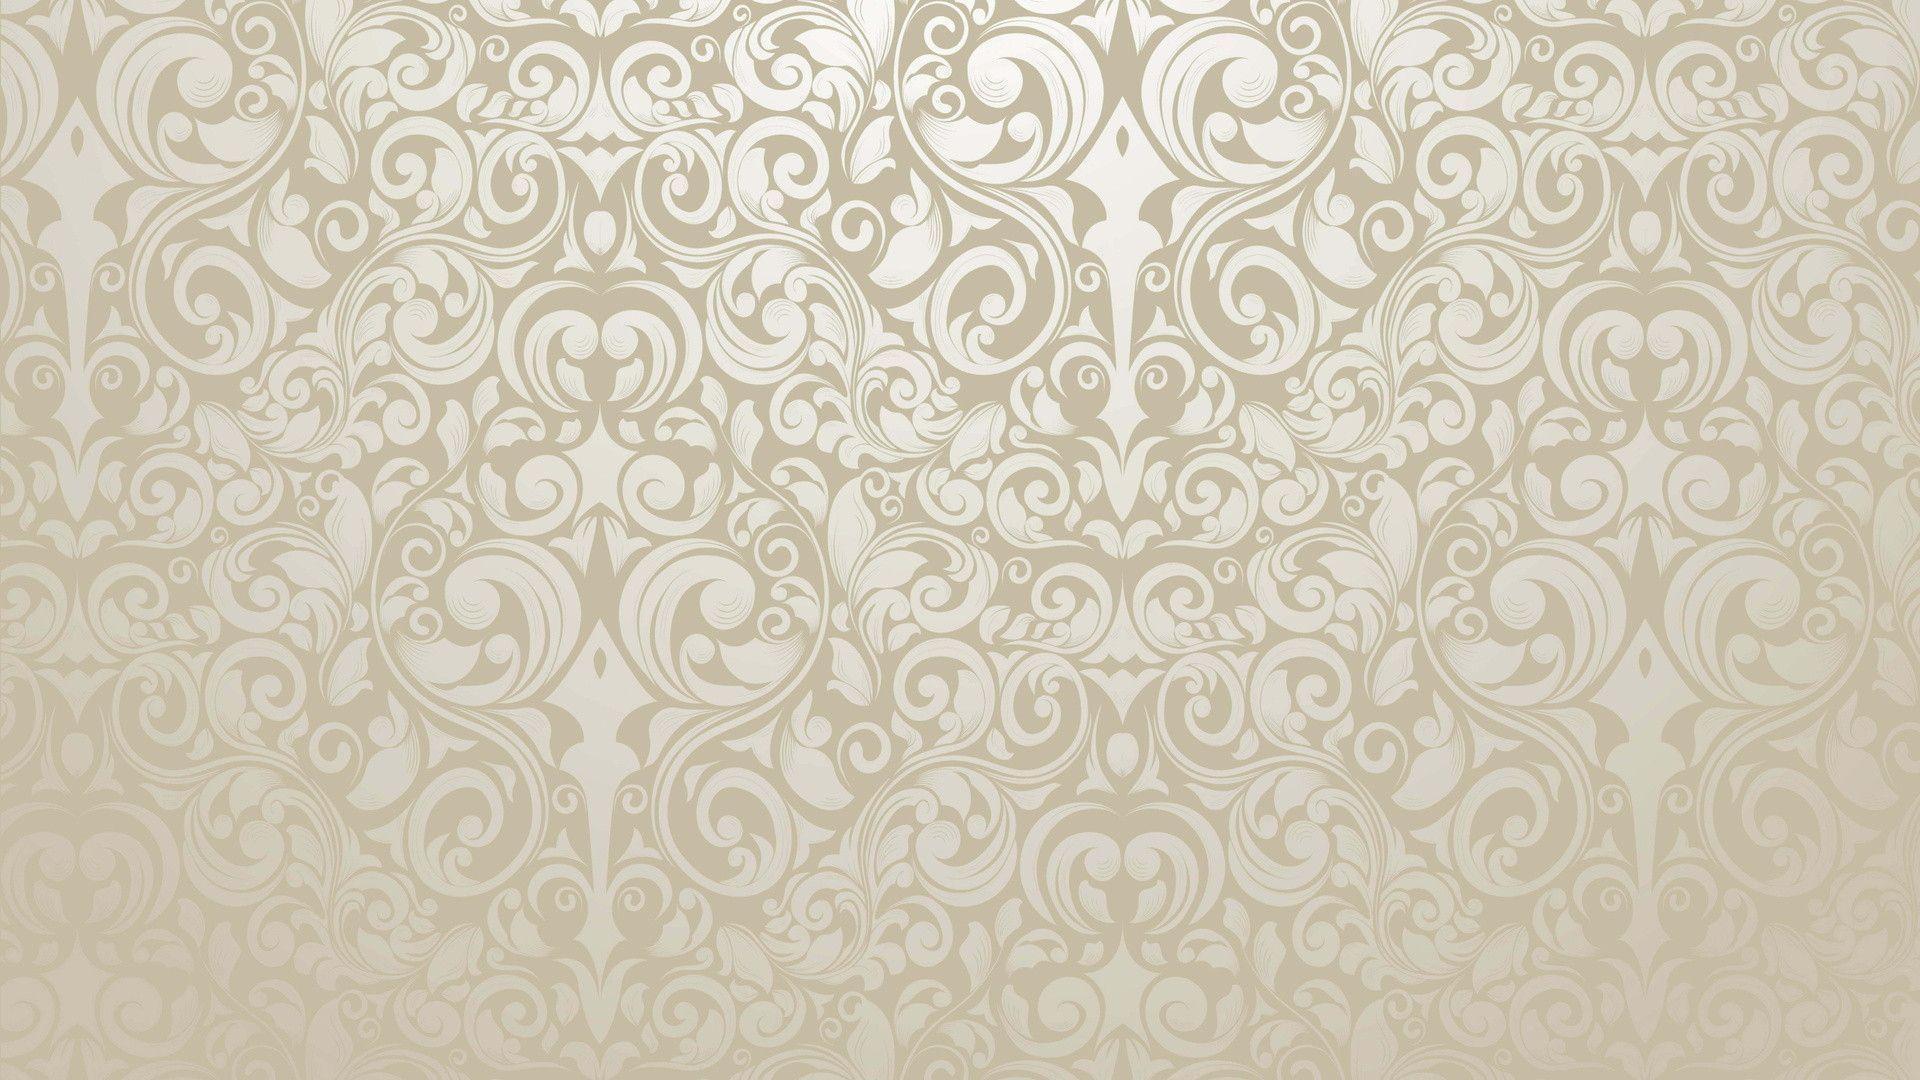 Free Texture Wallpaper 18900 1920x1080 px